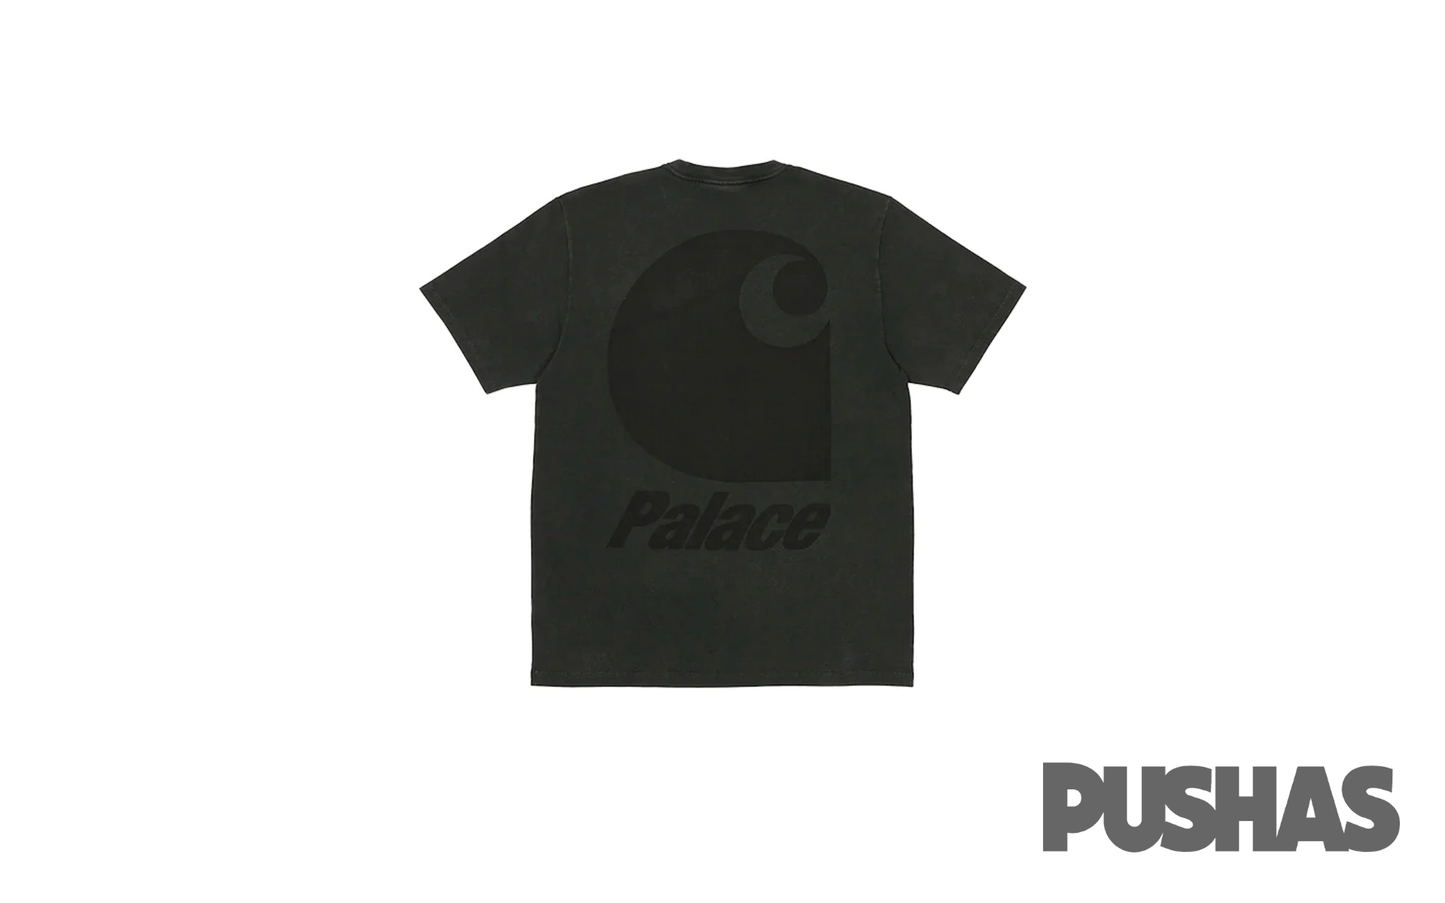 Palace x Carhartt WIP S/S Pocket T-Shirt 'Black' (2023)